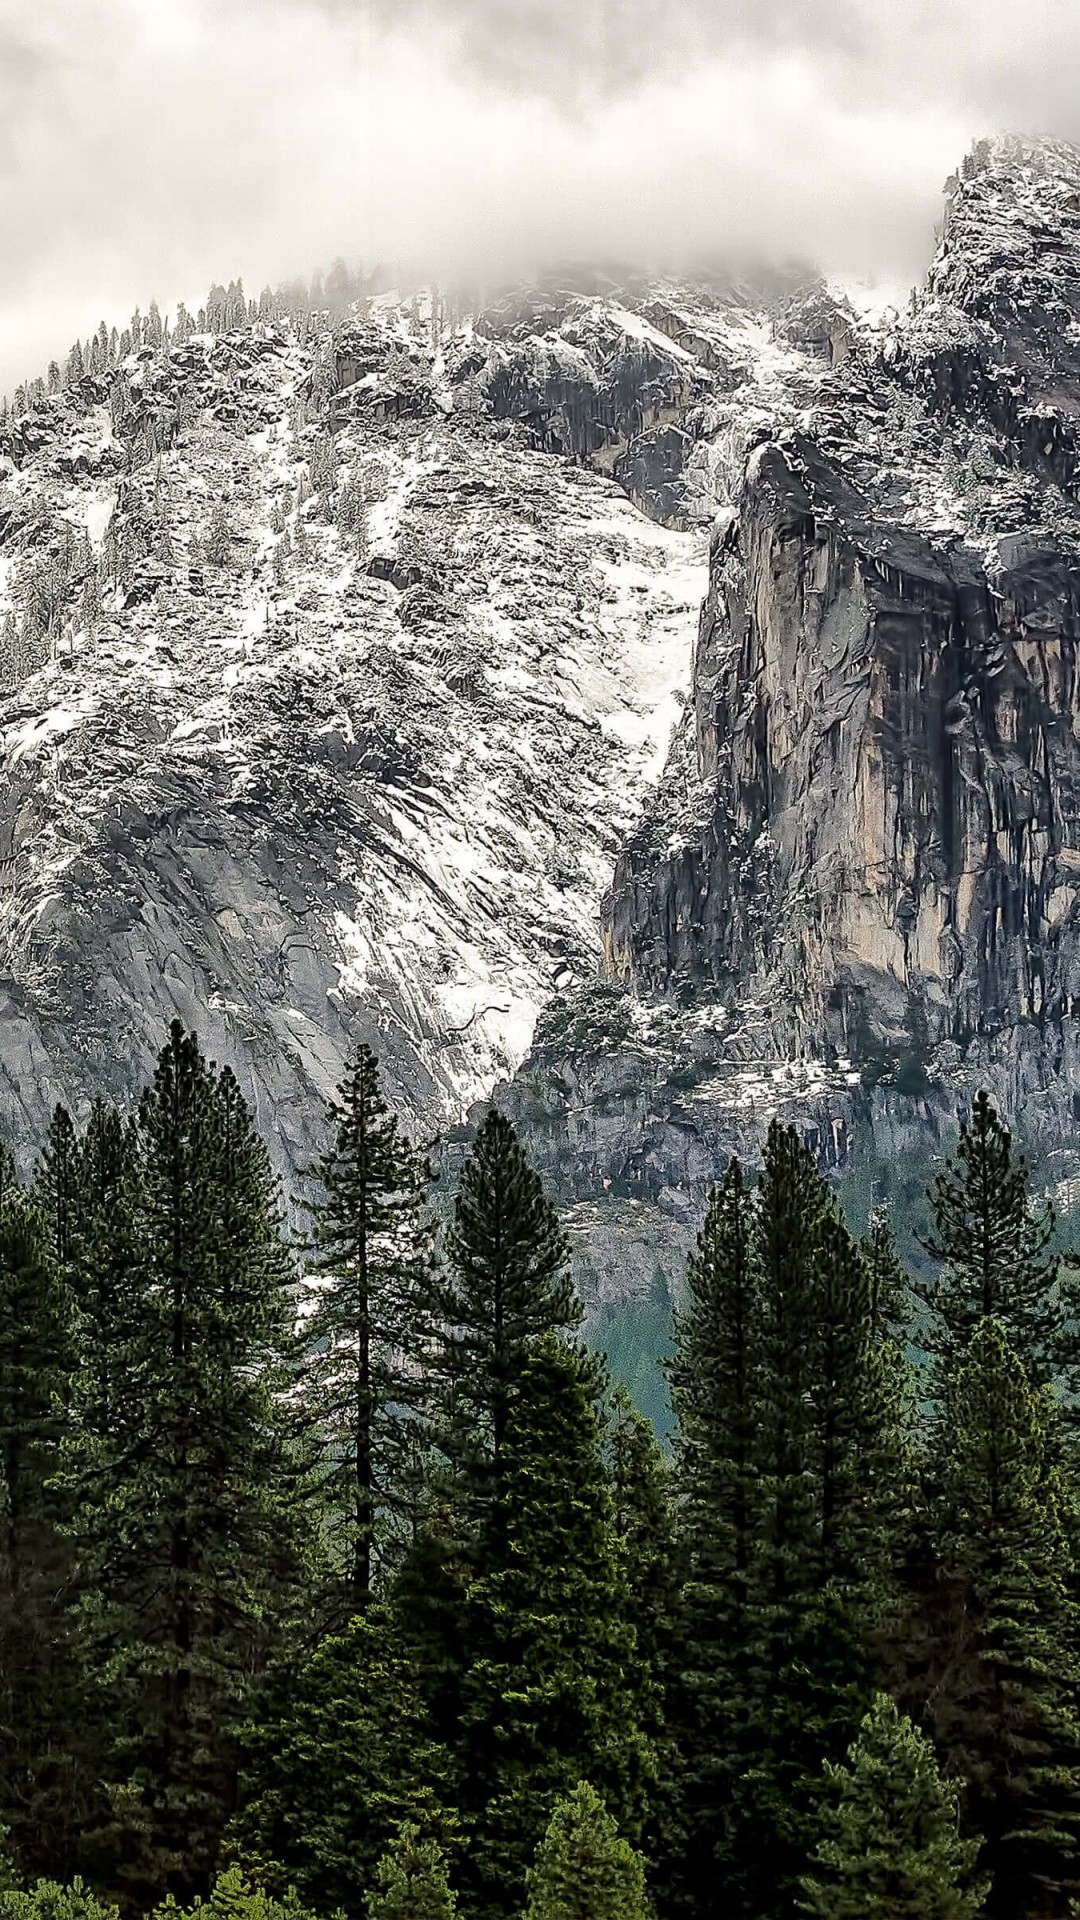 Winter Day at Yosemite National Park Wallpaper for Google Nexus 5X